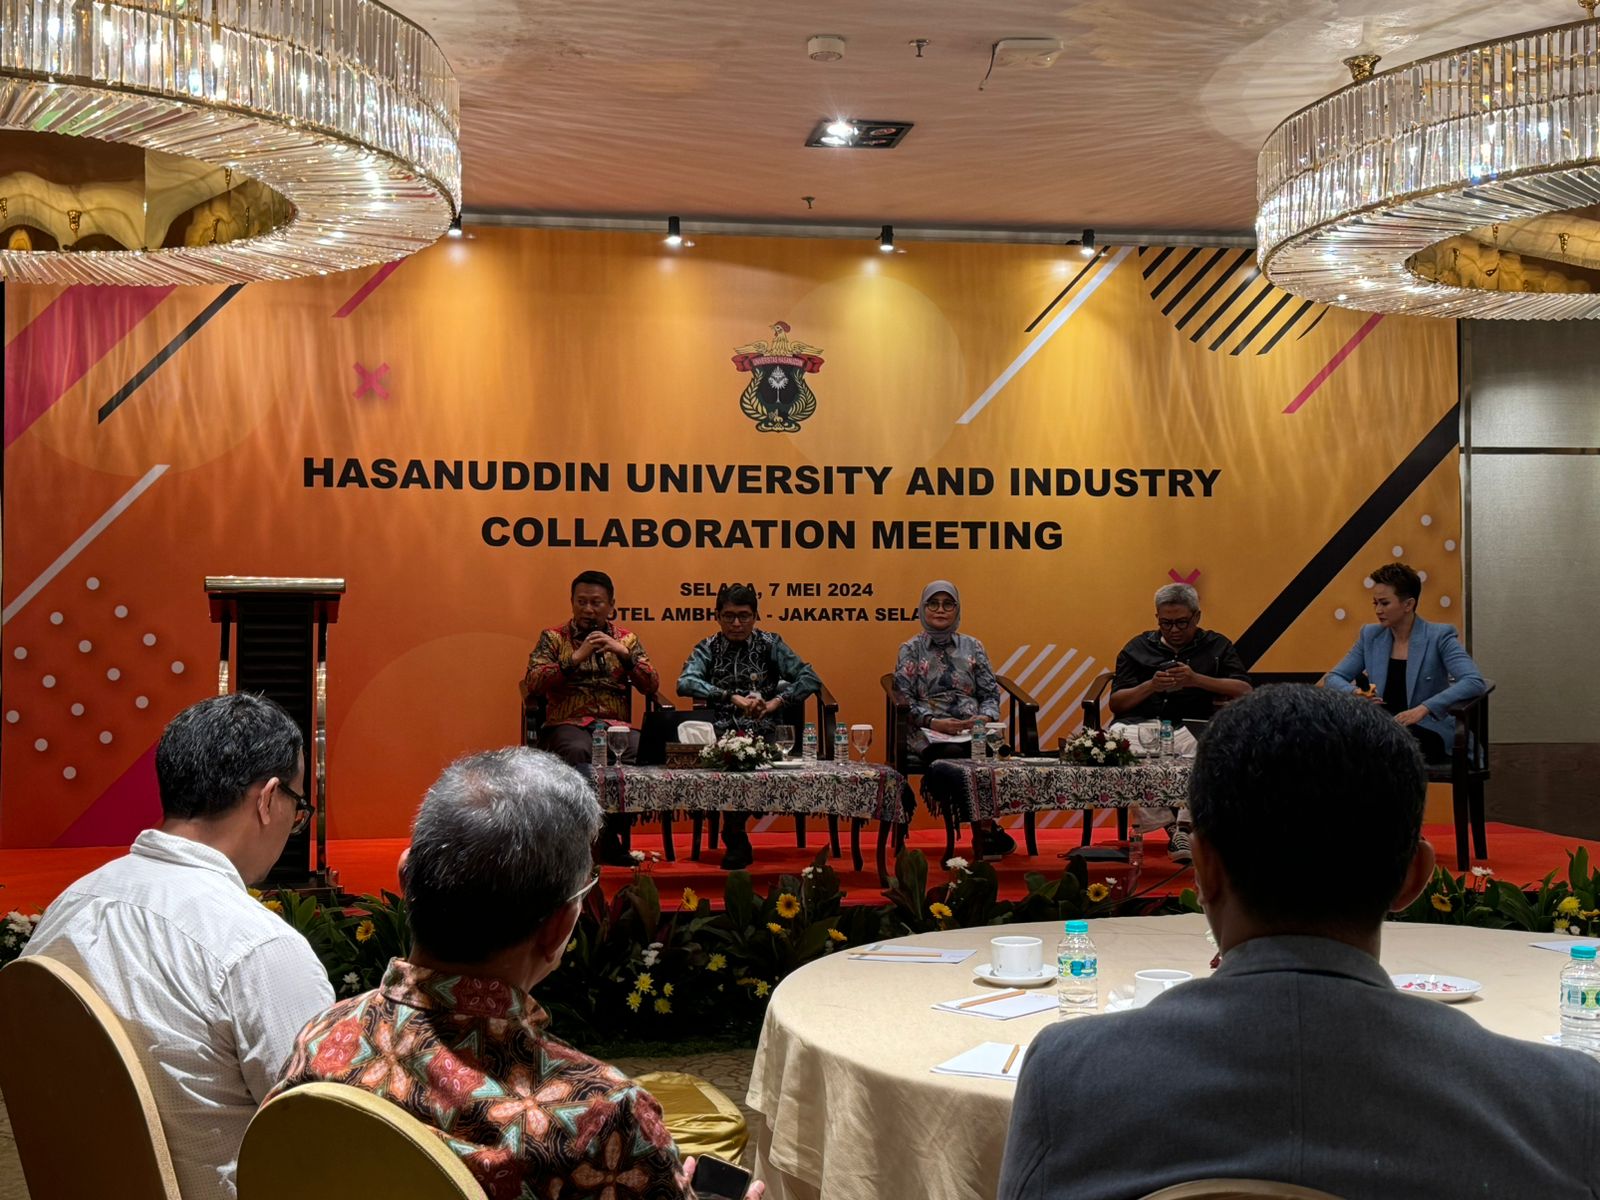 Suasana Diskusi kegiatan “Hasanuddin University and Industry Collaboration Meeting” yang diinisiasi oleh Universitas Hasanuddin Makassar, Selasa (7/5).di Hotel Ambhara Jakarta